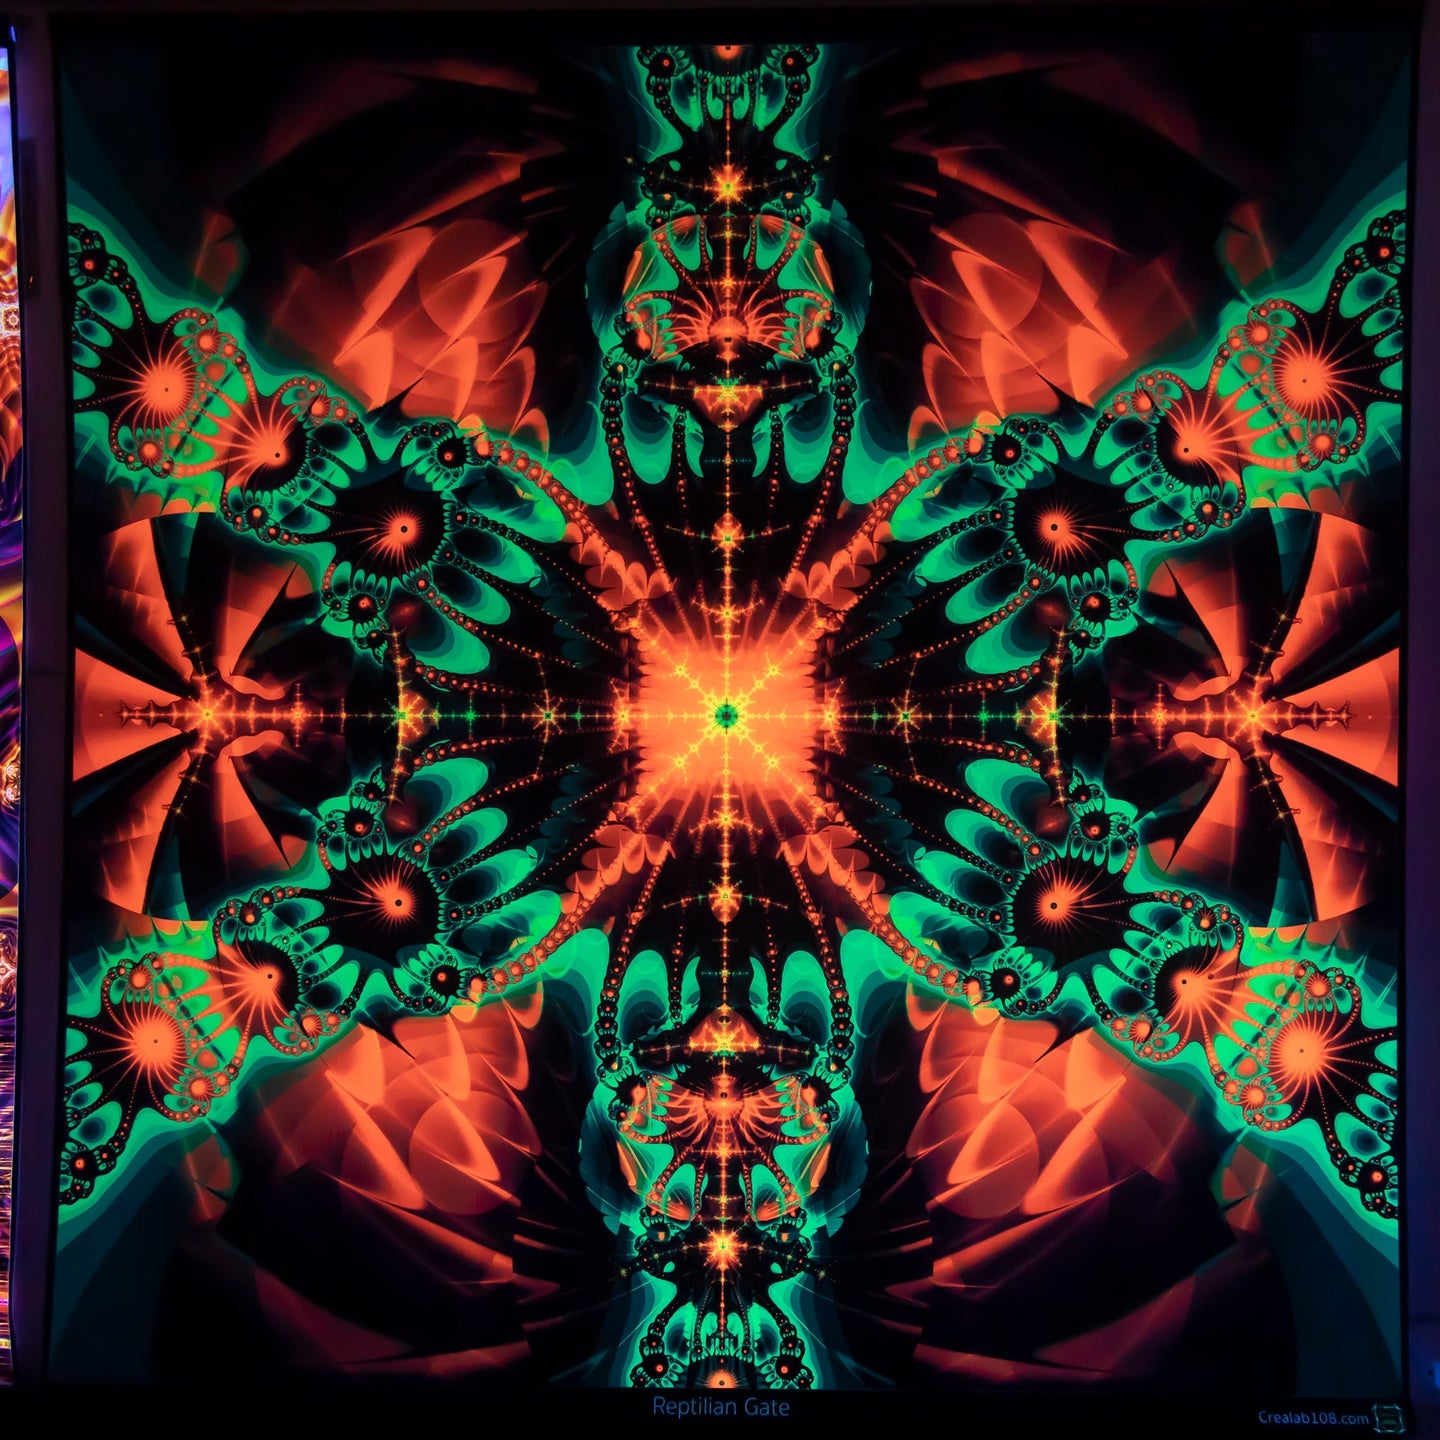 Reptilian Gate Psychedelic Mandala Fractal UV Tapestry - Crealab108